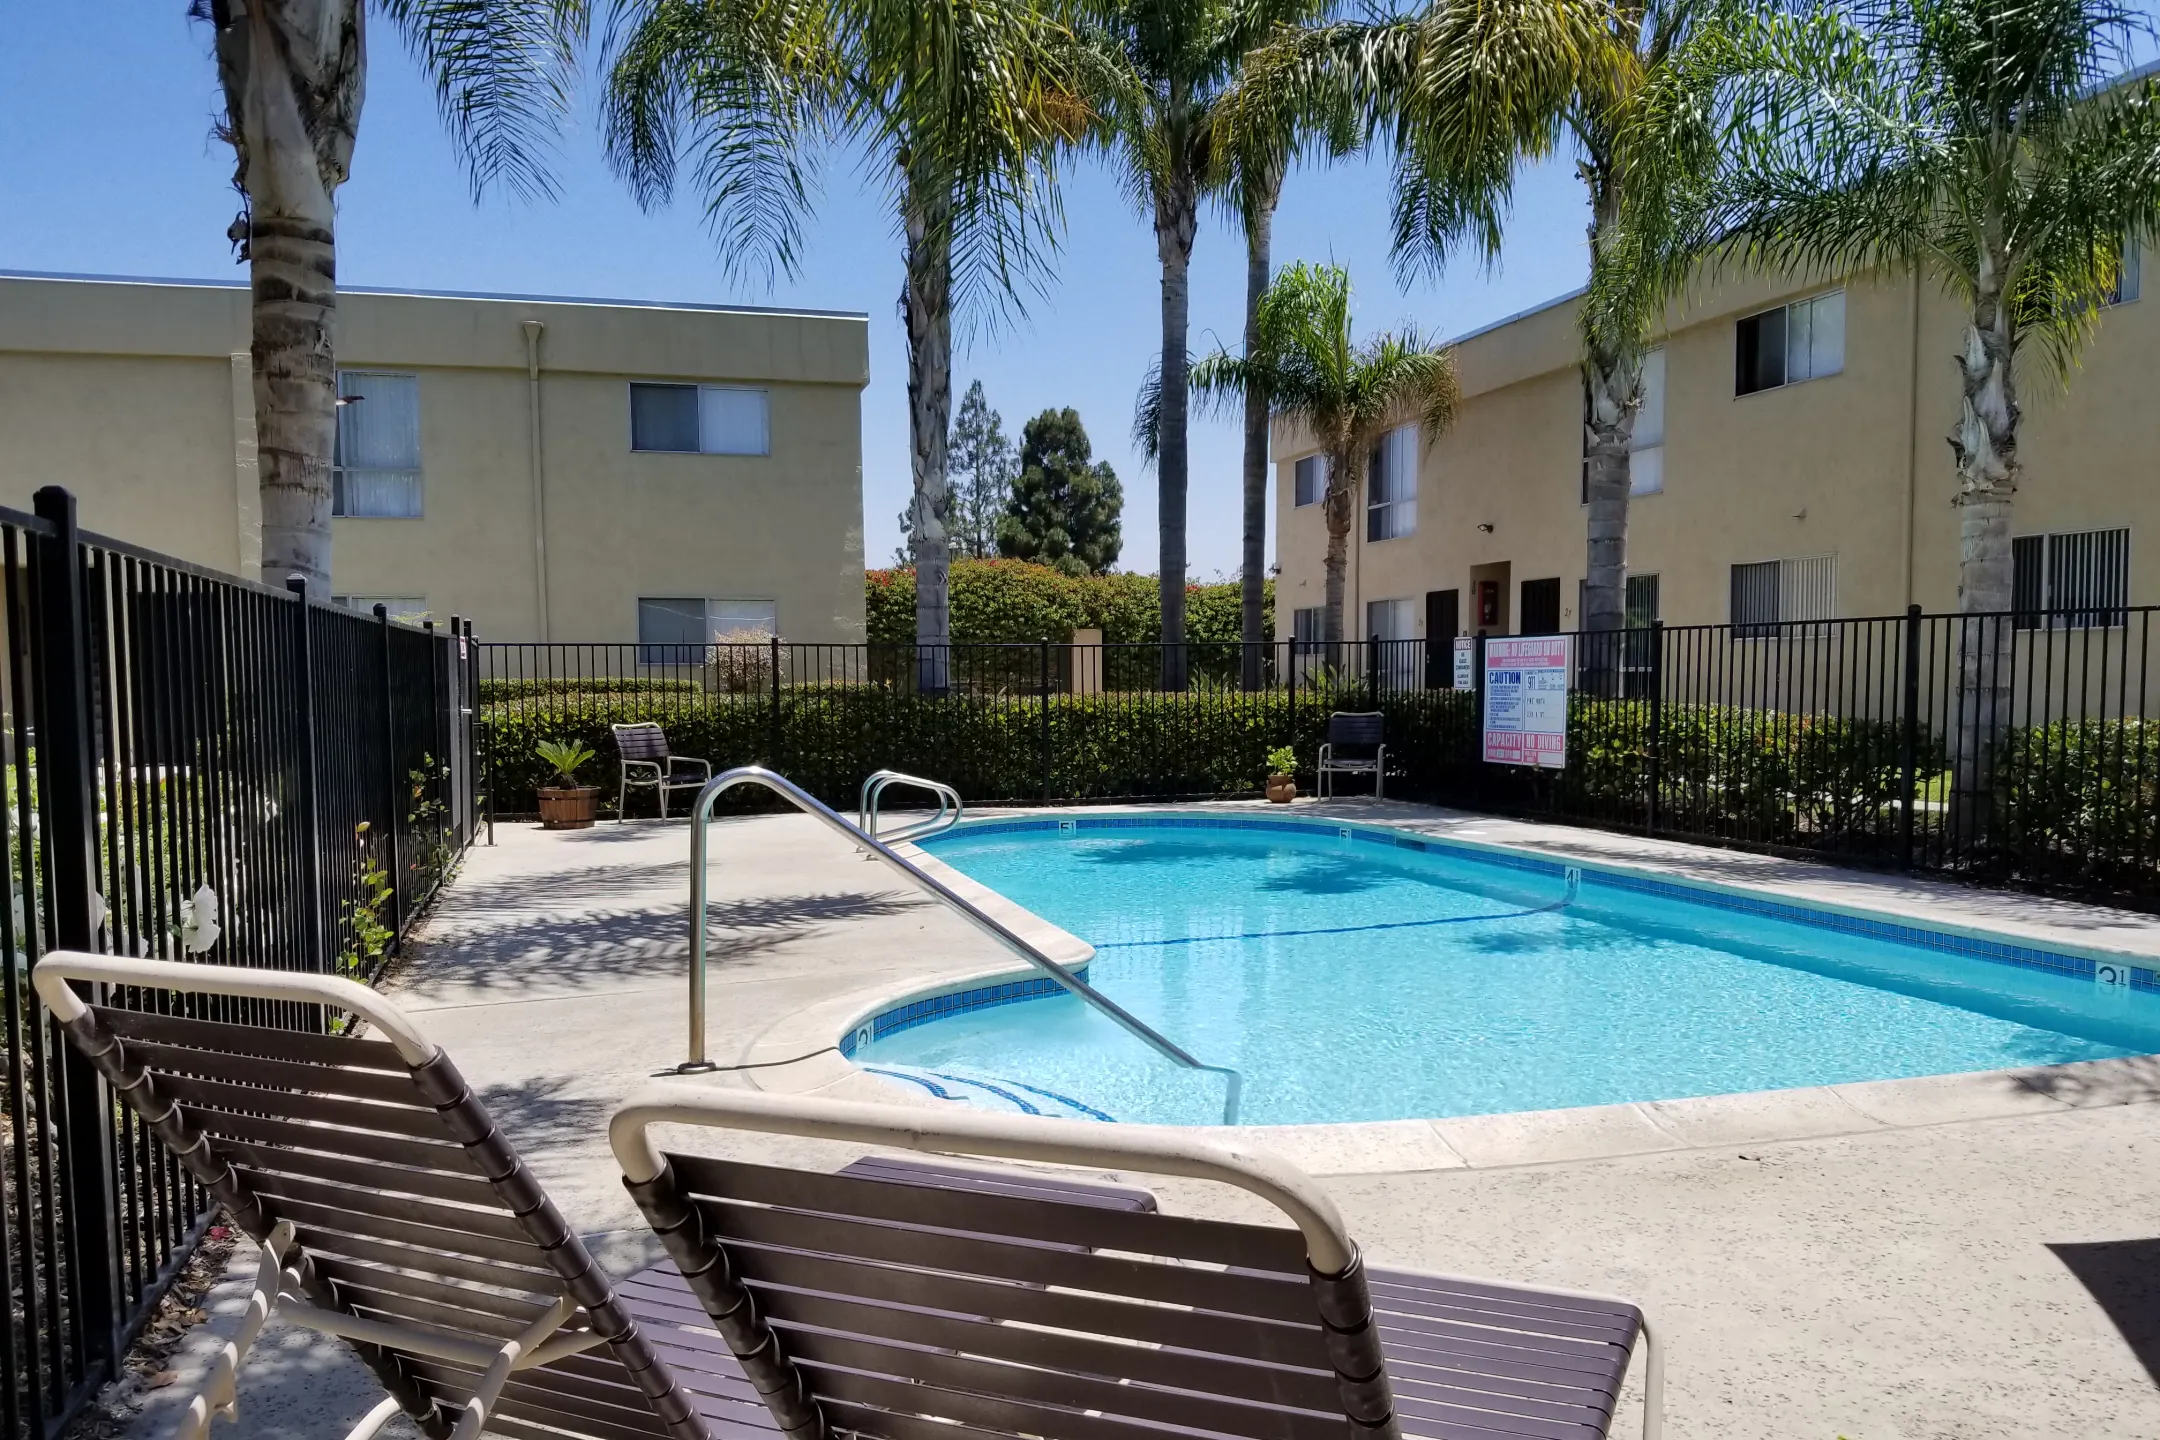 Pool - Pine Vista - Chula Vista, CA